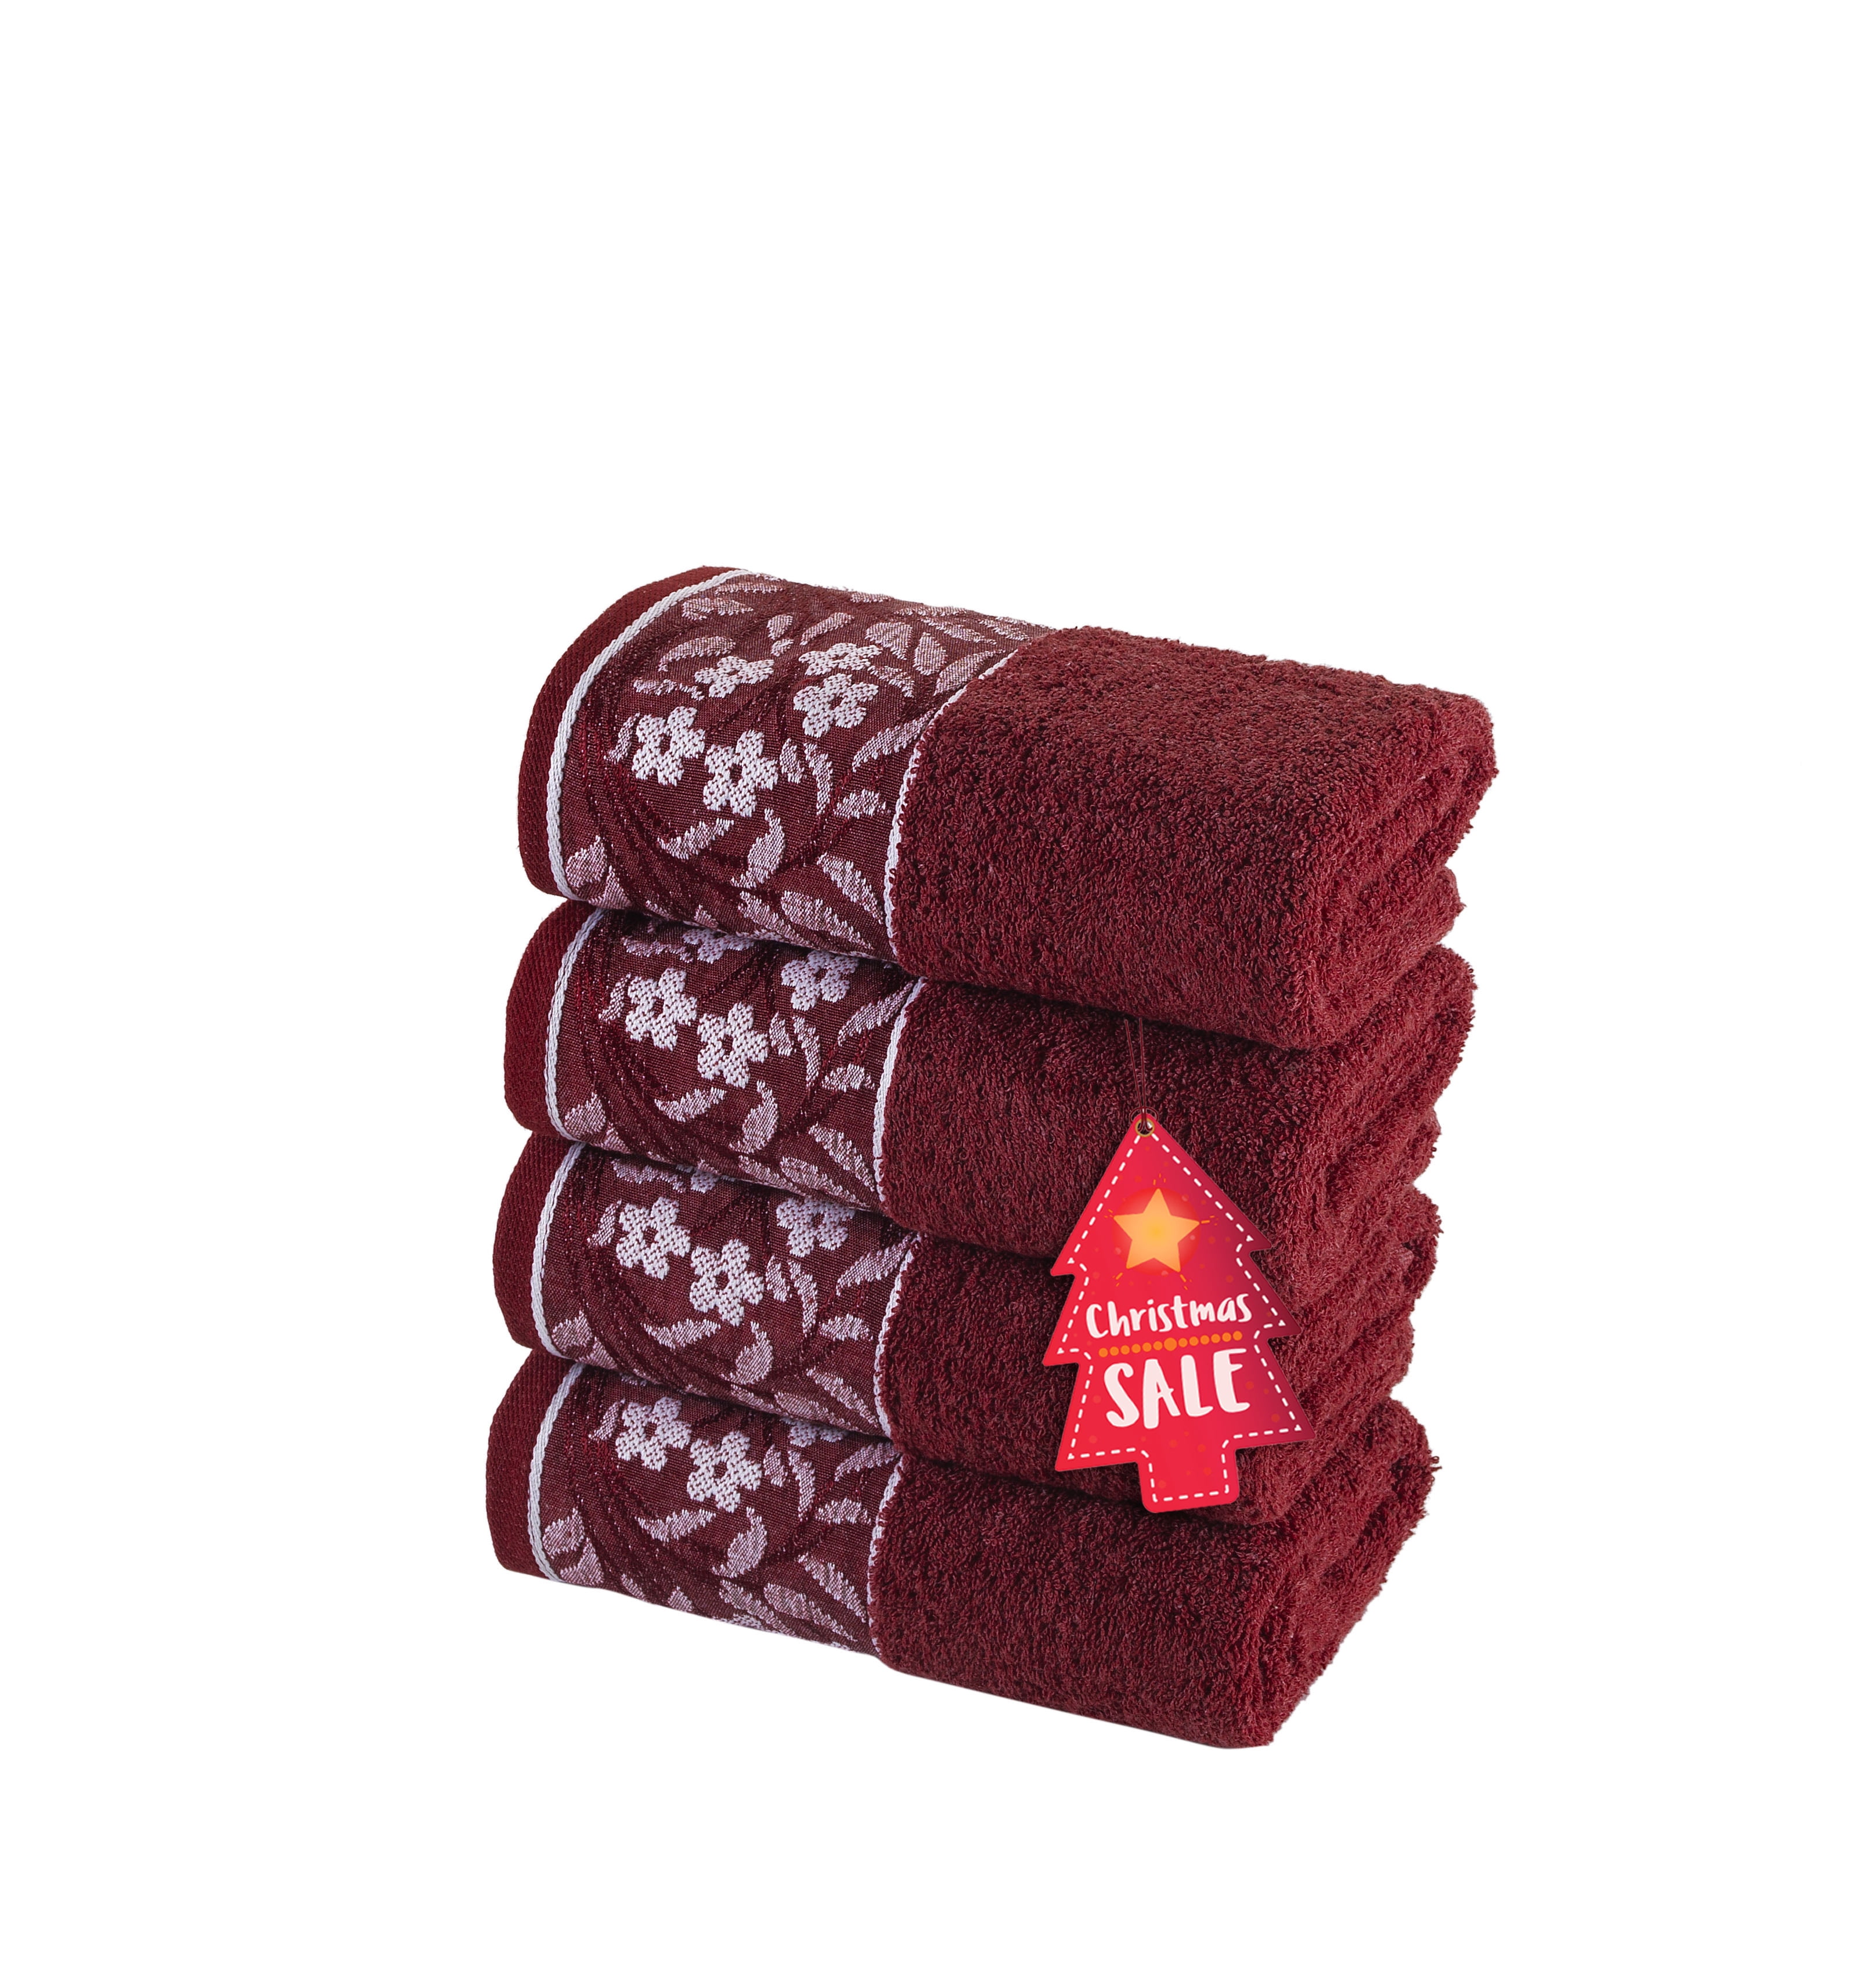 Rumi & Shams Turkish Hand Towels for Bathroom | 2 pcs Farmhouse Hand Towels  | 16 x 32 Inches Boho Hand Towels | 100% Cotton Turkish Kitchen Towels 